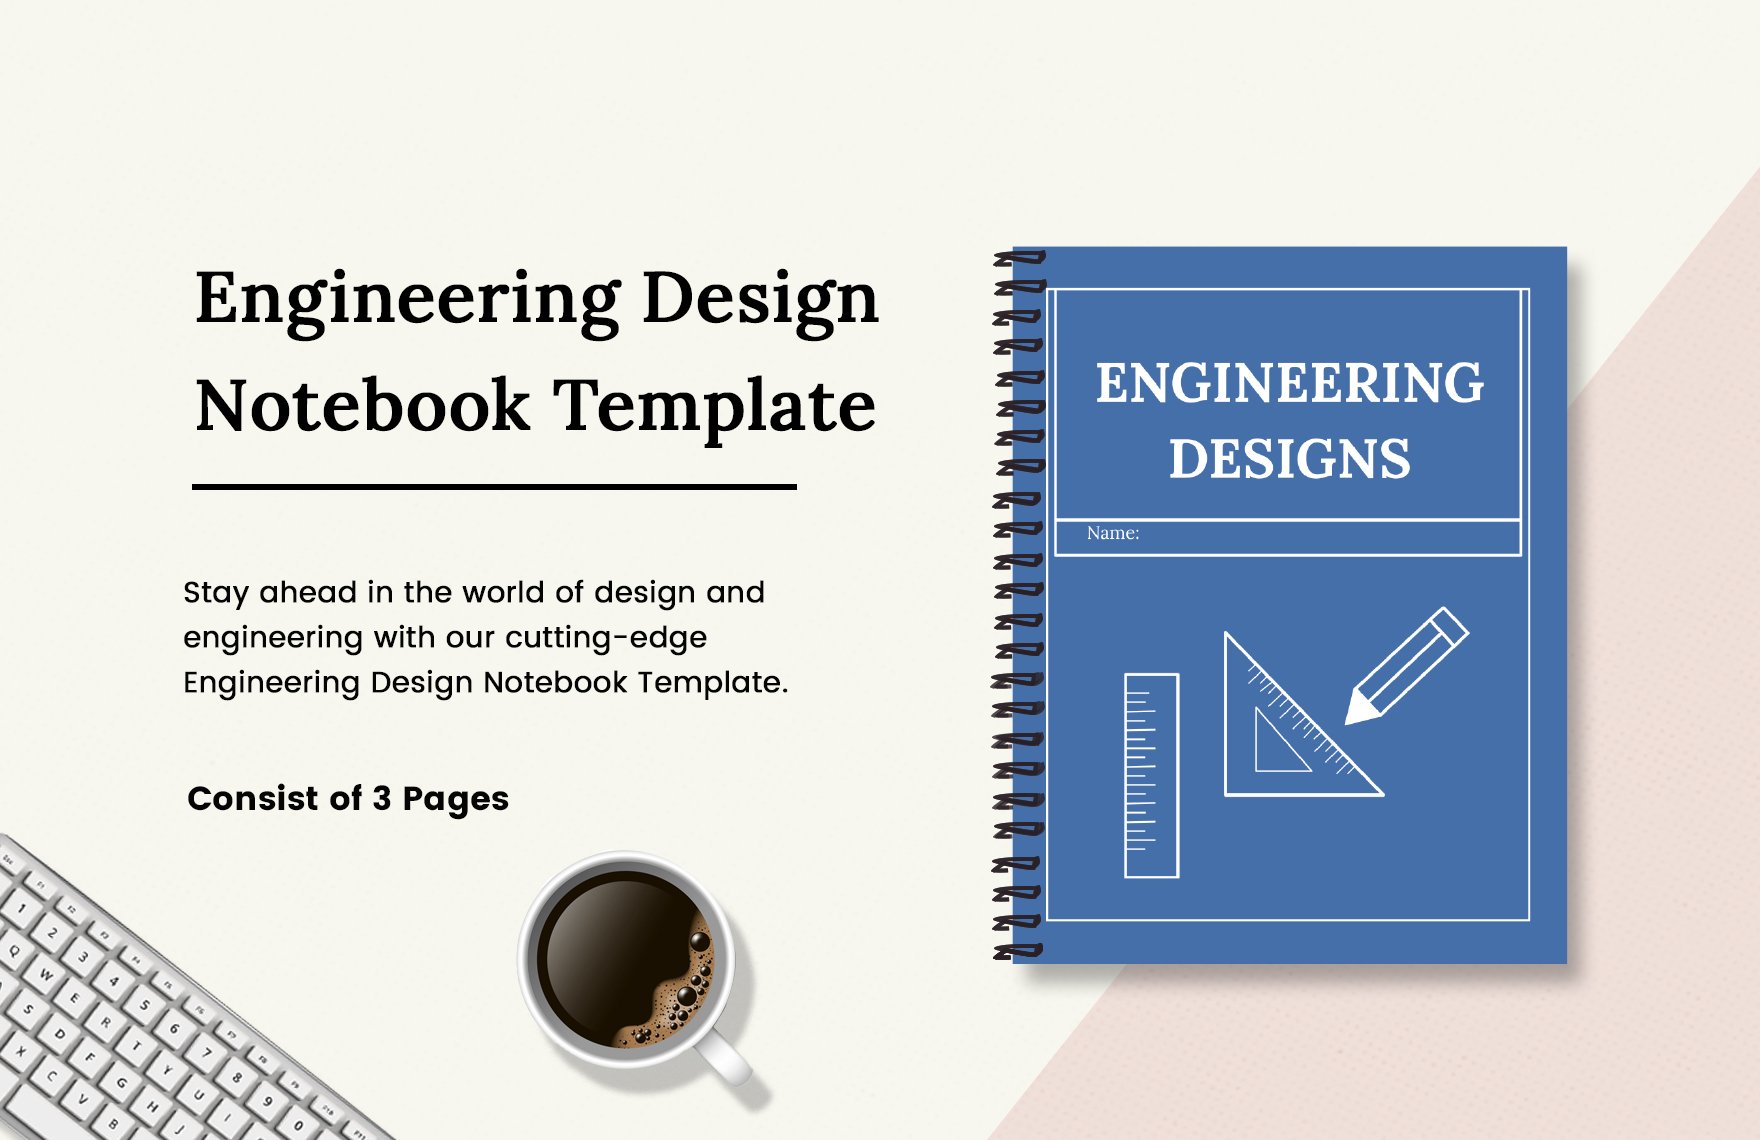 Engineering Design Notebook Template in Word, Google Docs, PDF